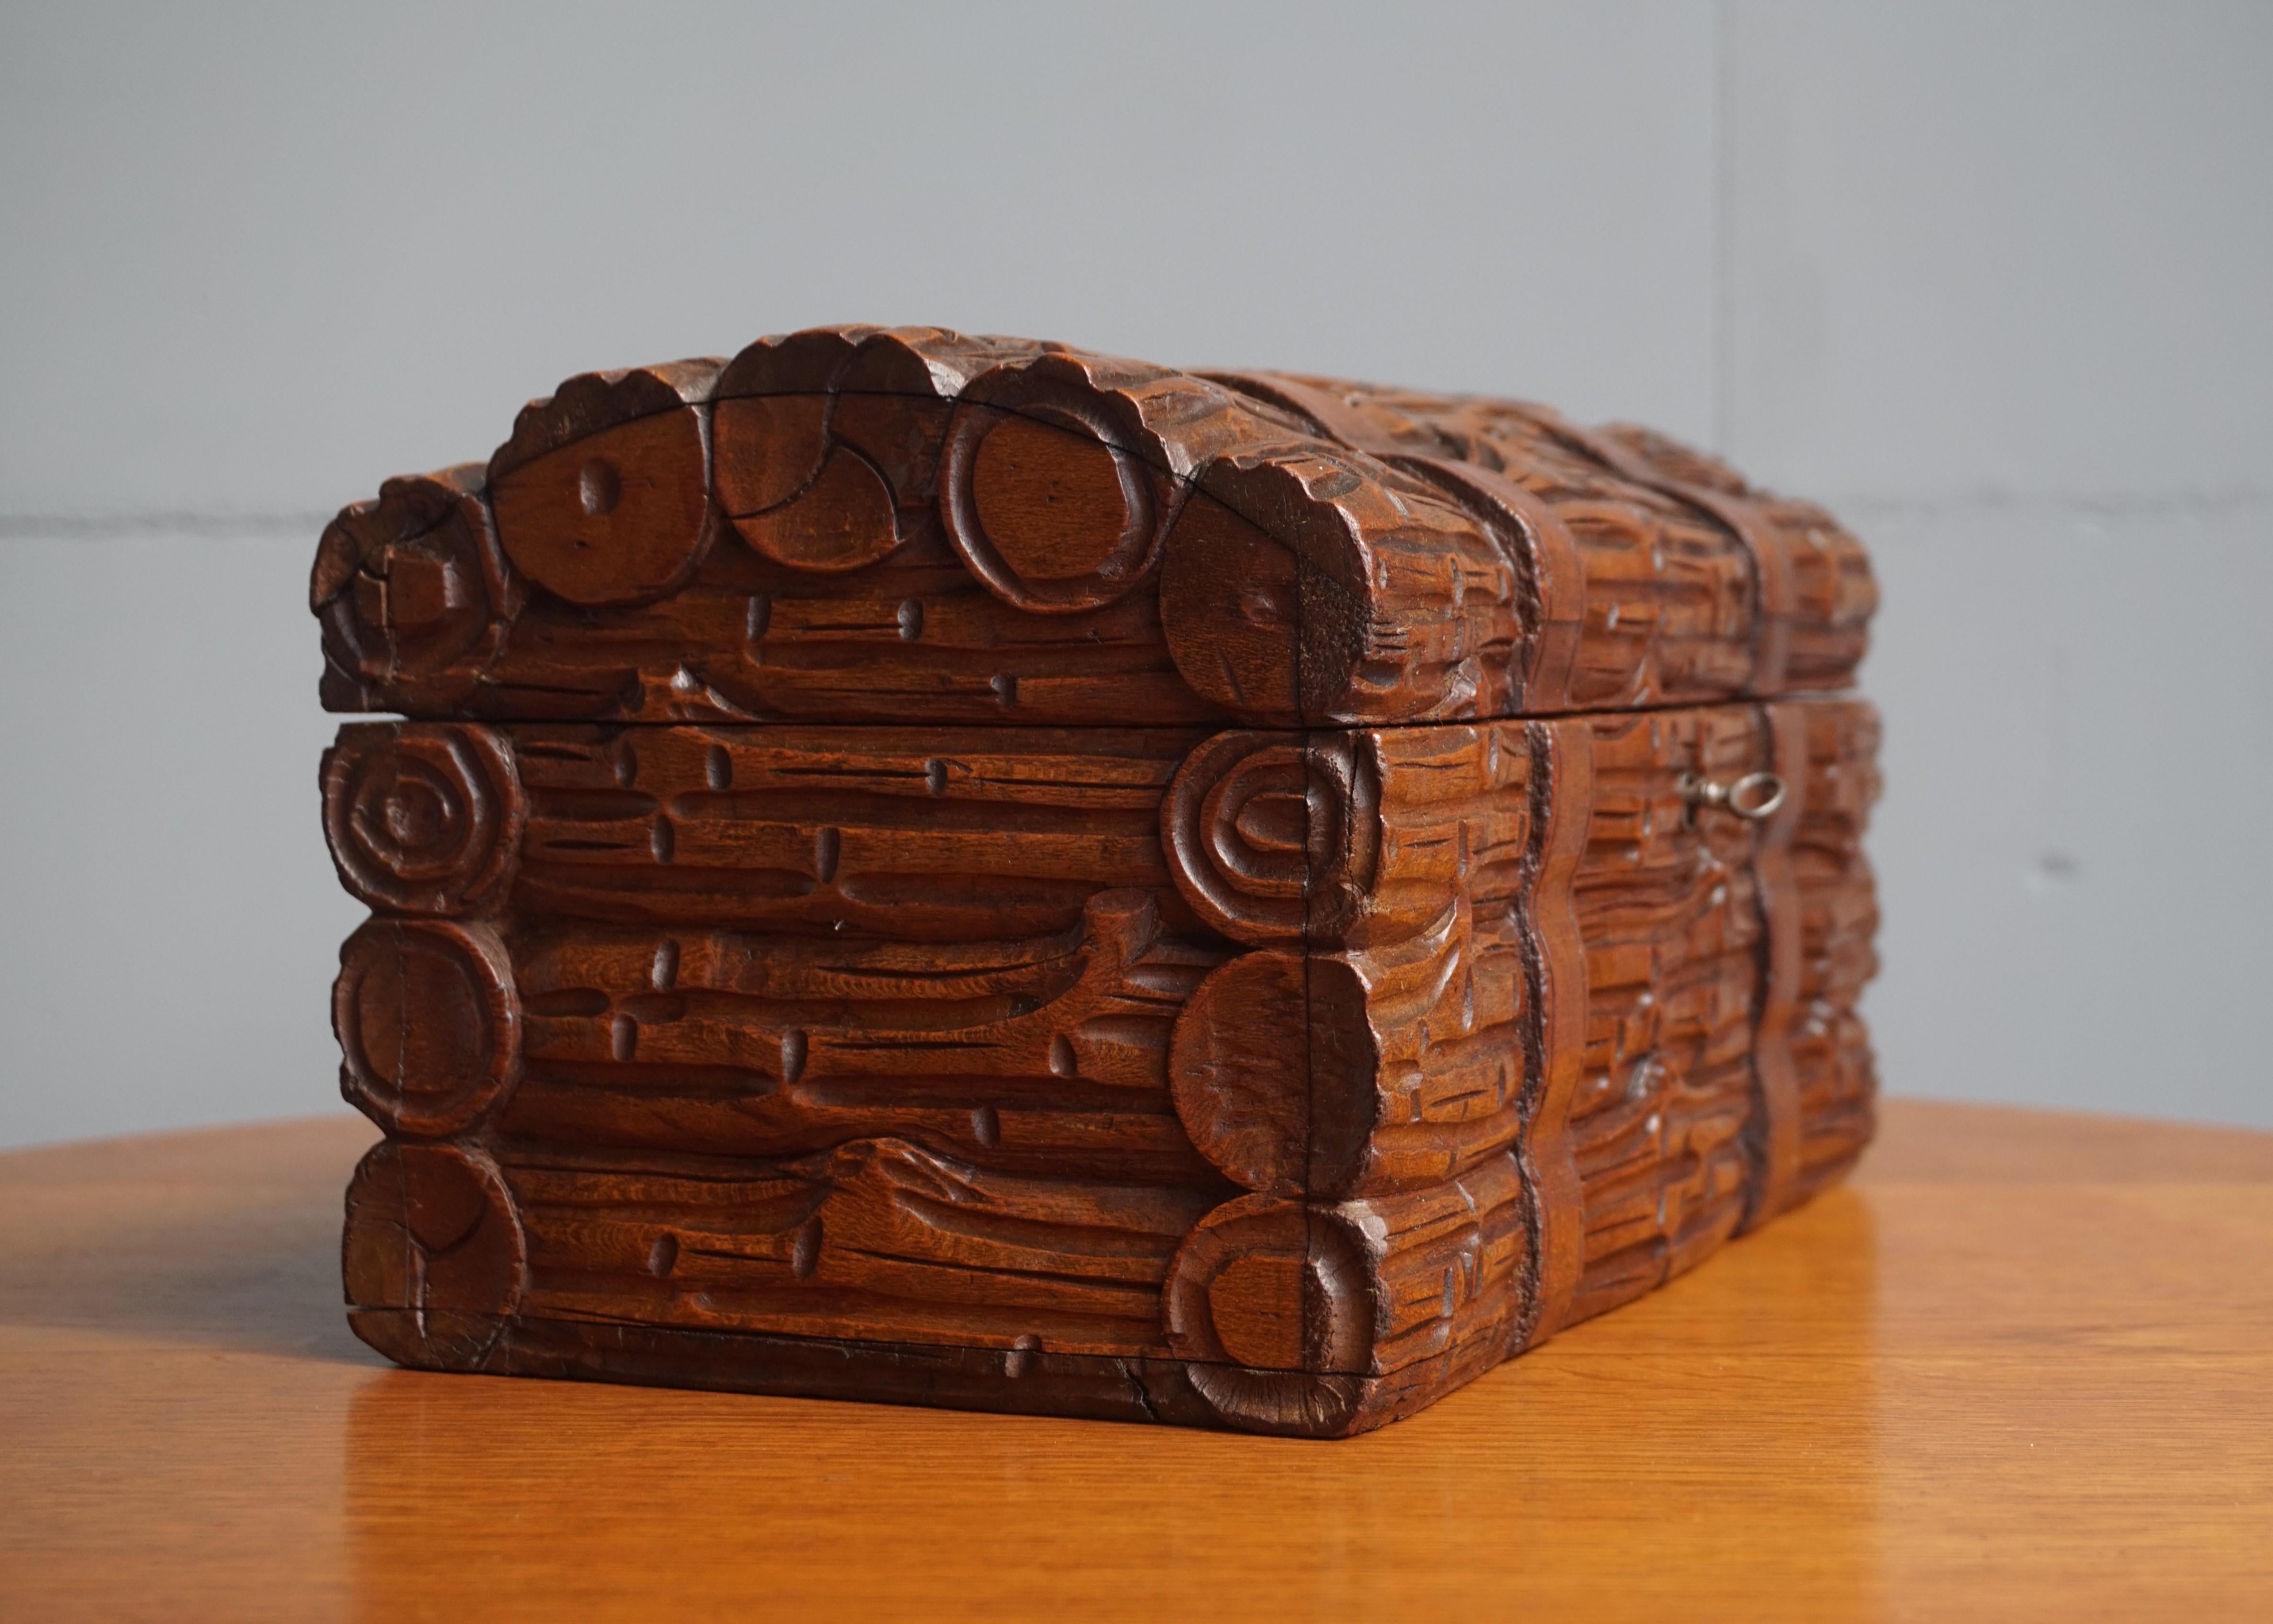 antique chest trunk